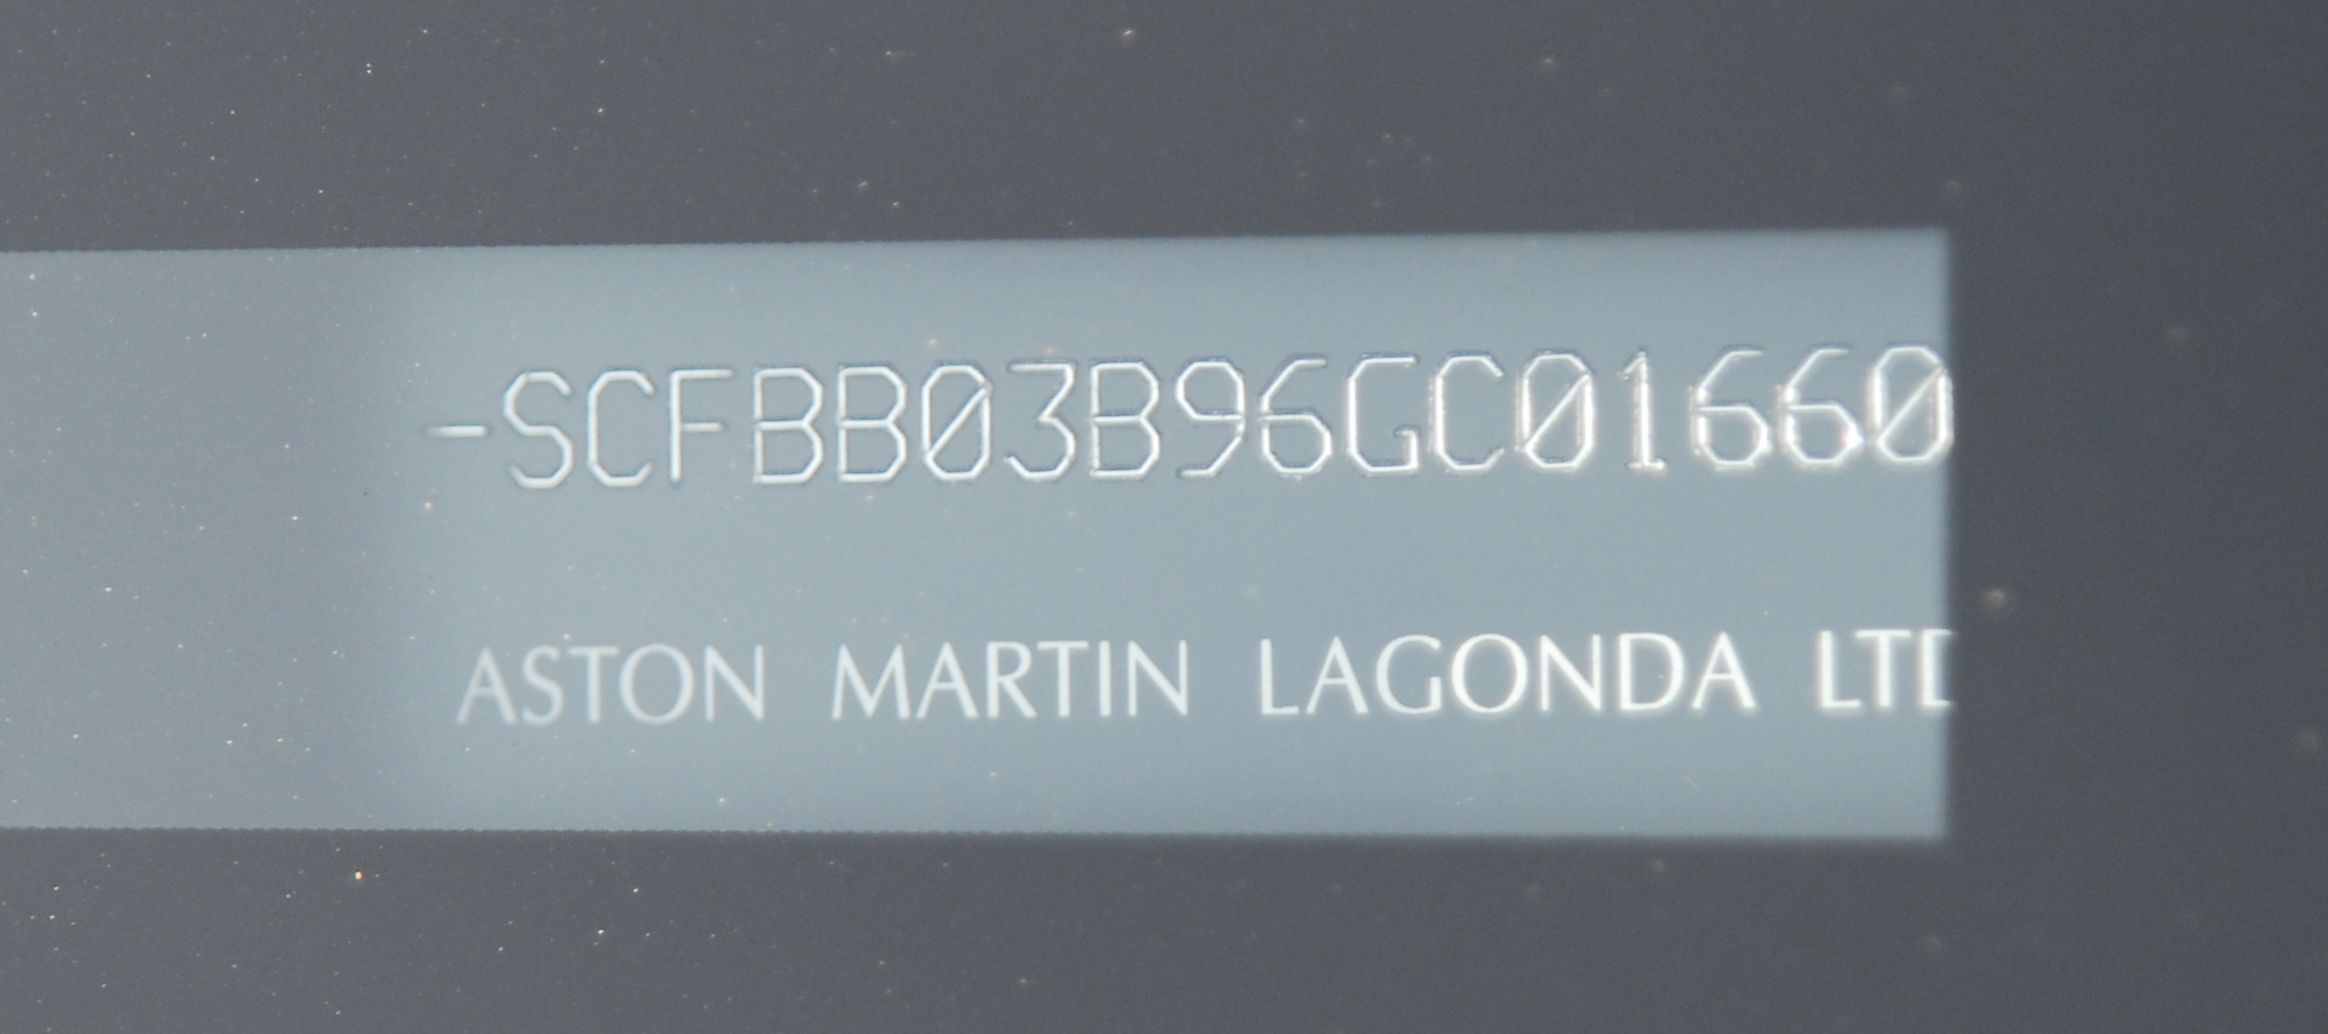 aston martin lagonda limited